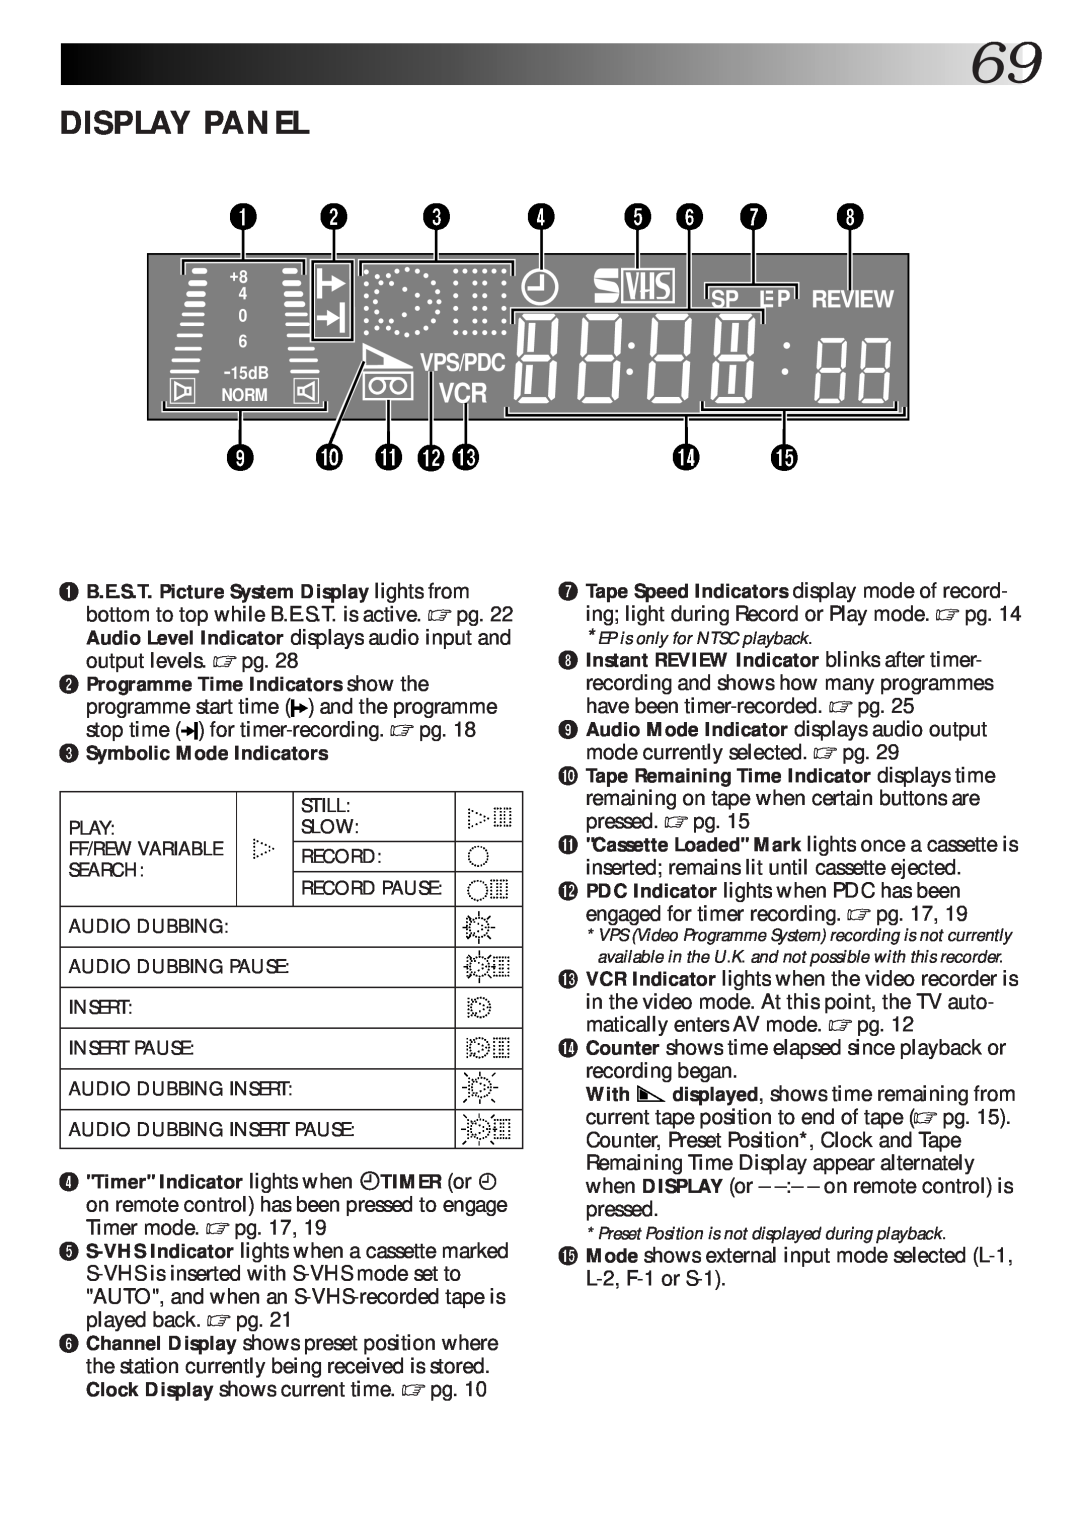 JVC HR-S9600EK setup guide Display Panel, Vps/Pdc, Review, Symbolic Mode Indicators 